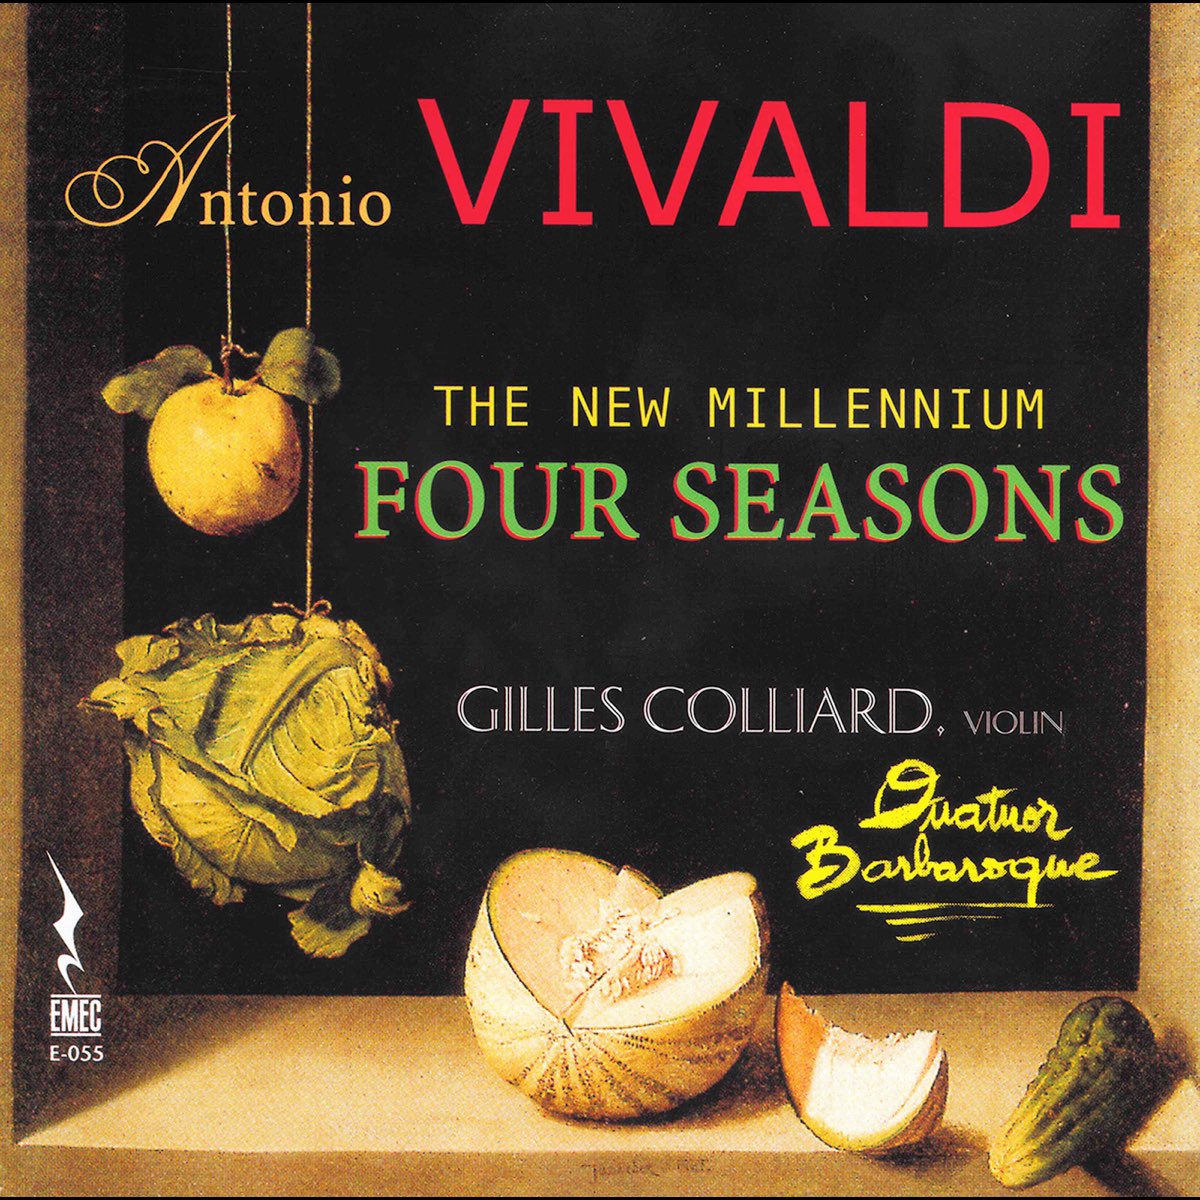 The four seasons violin